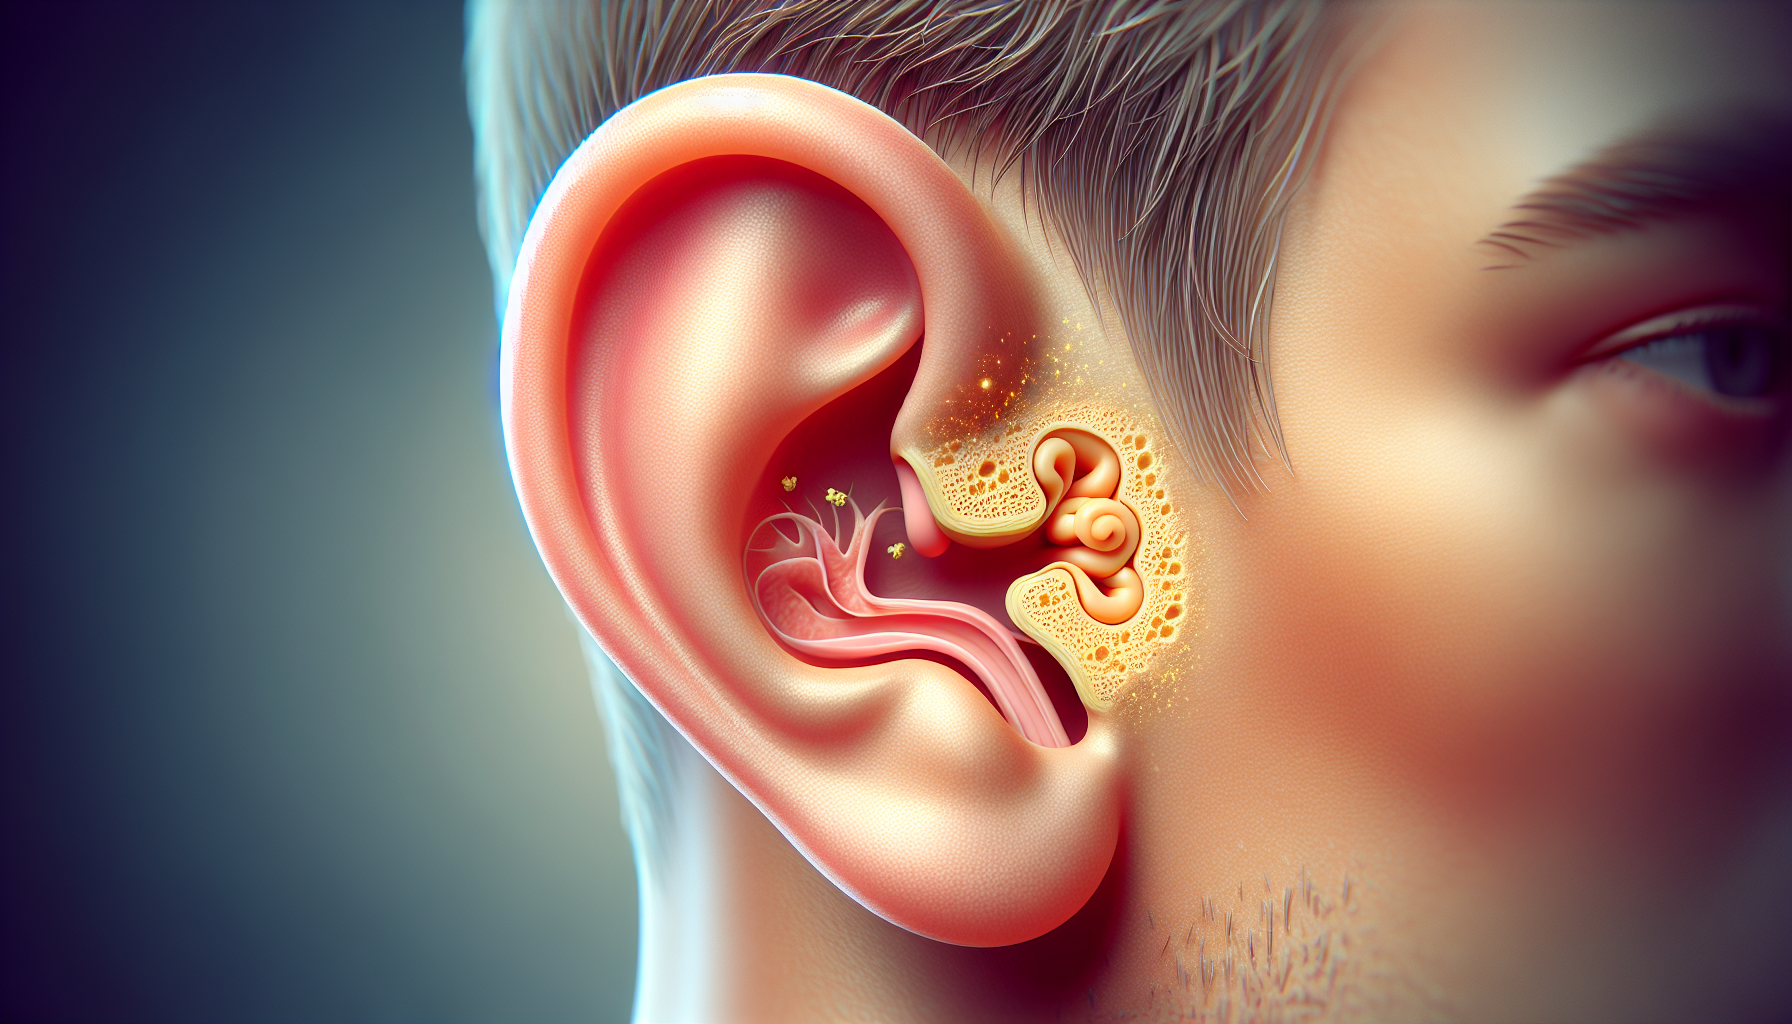 Illustration of Eustachian tube dysfunction and earwax buildup